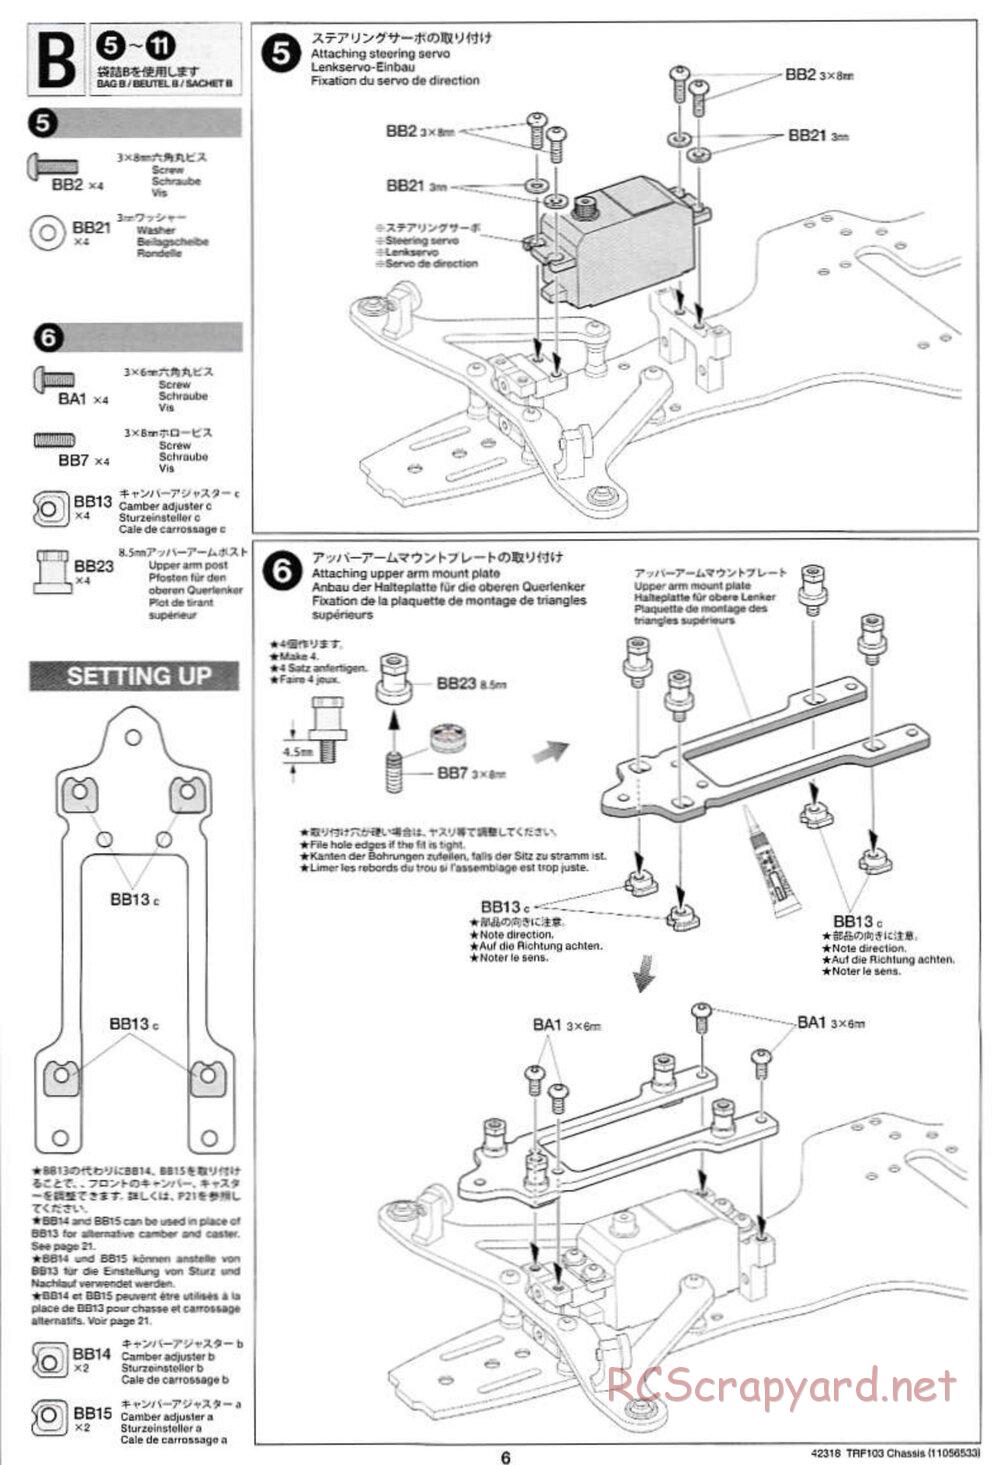 Tamiya - TRF103 Chassis - Manual - Page 6